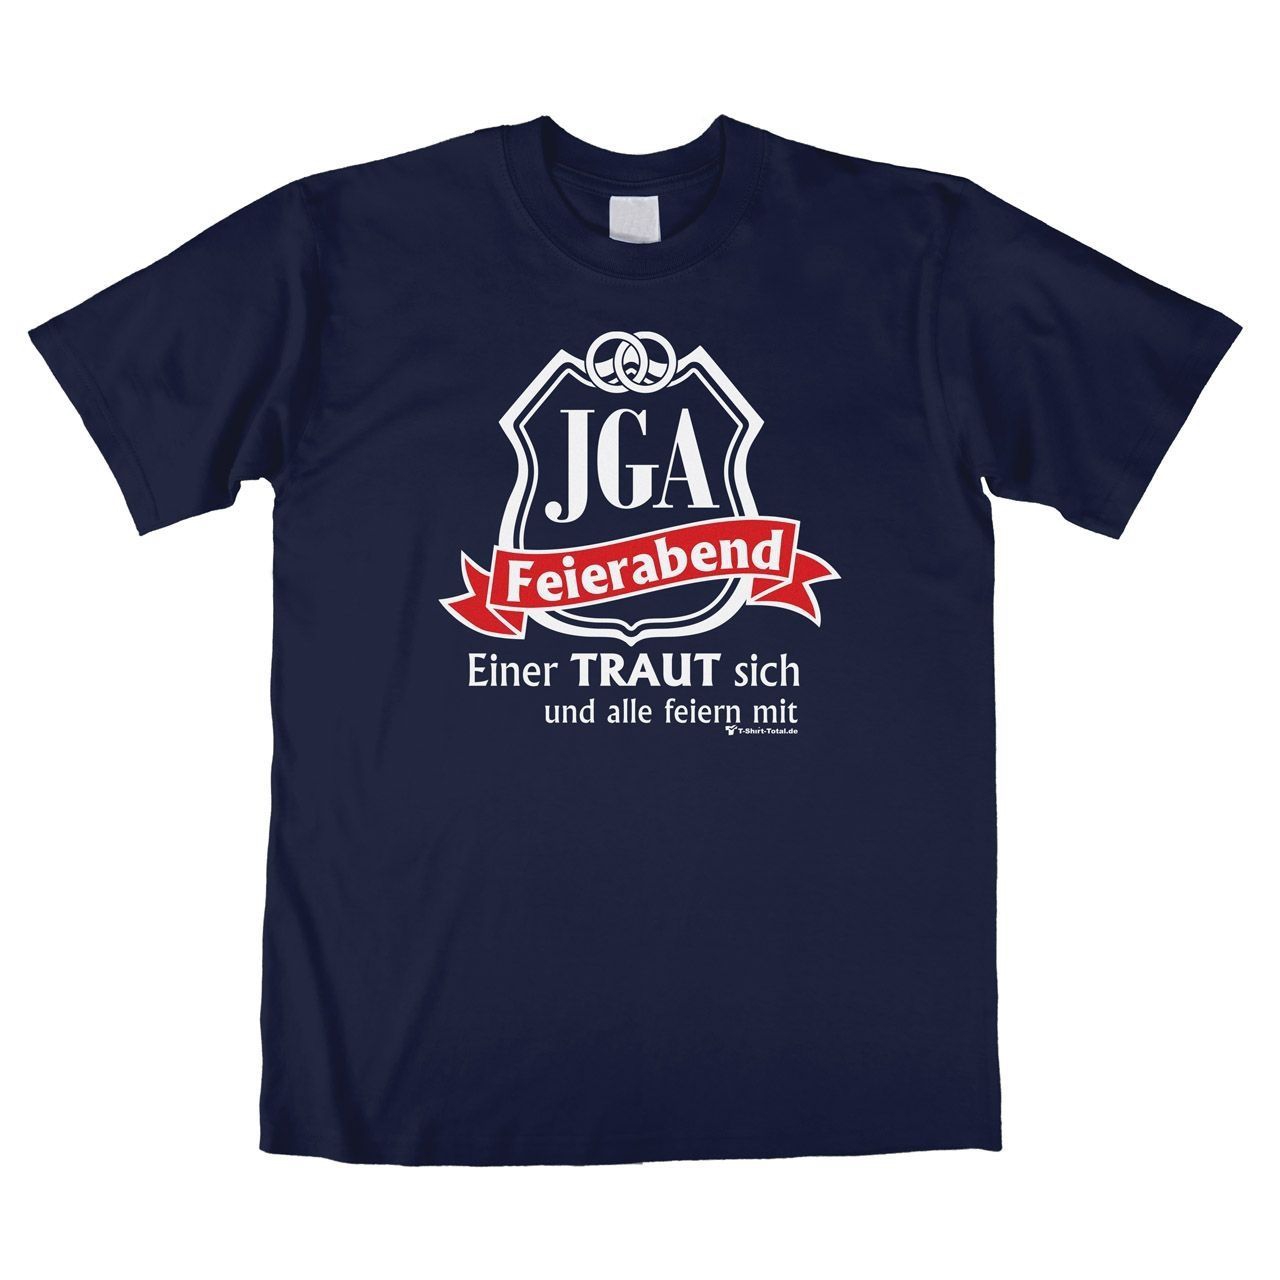 JGA Feierabend Unisex T-Shirt navy Medium